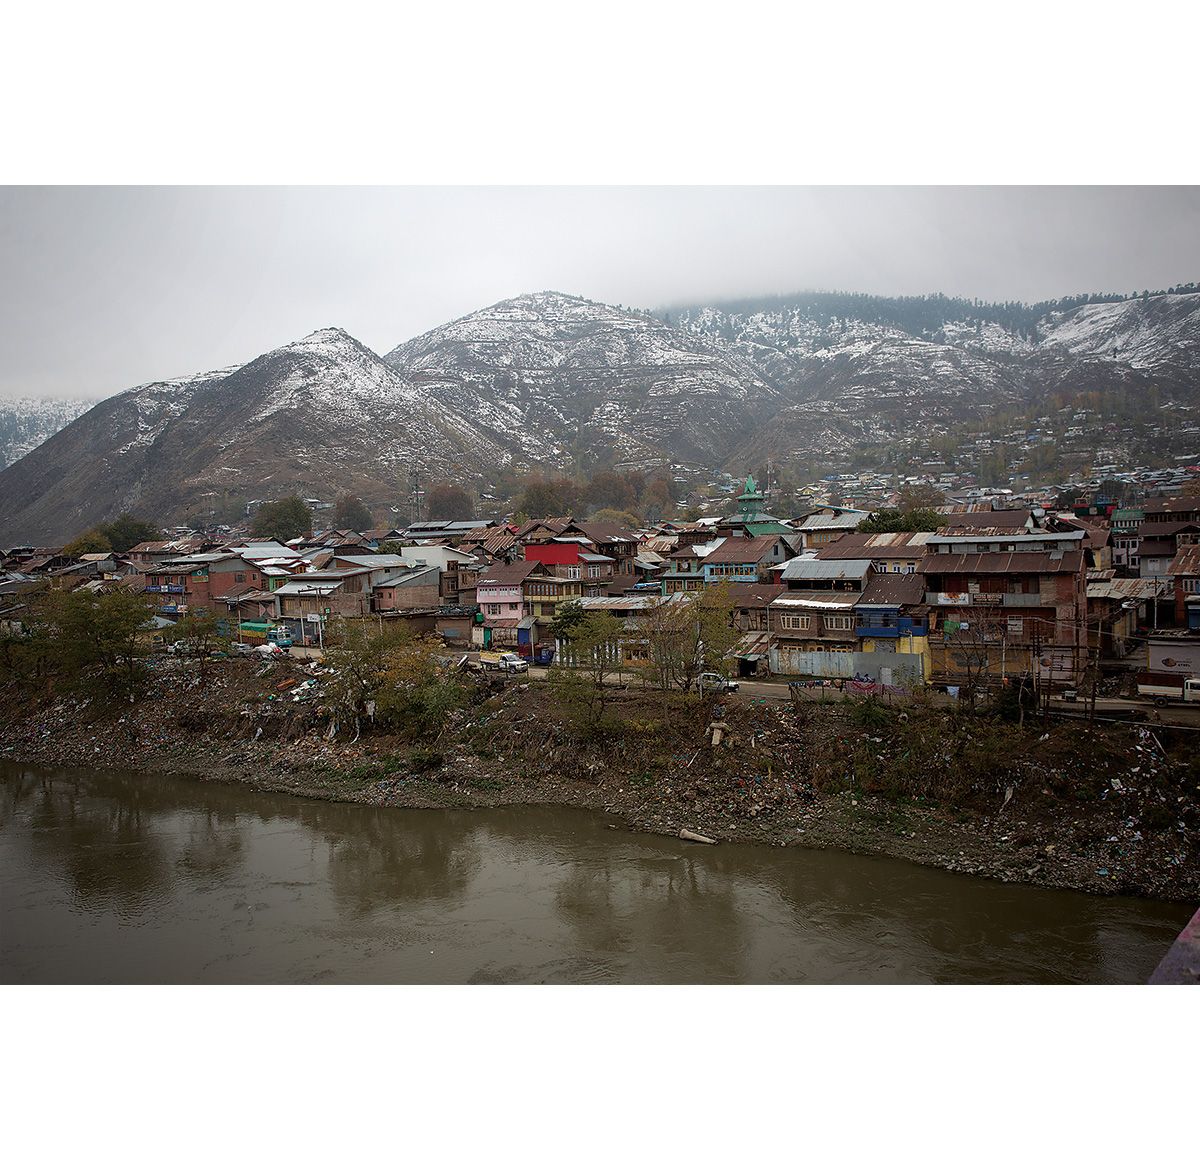 Baramulla, a city on the Jhelum River, thirty miles northwest of Srinagar, Kashmir. Image by Abid Bhat. Kashmir, 2019.